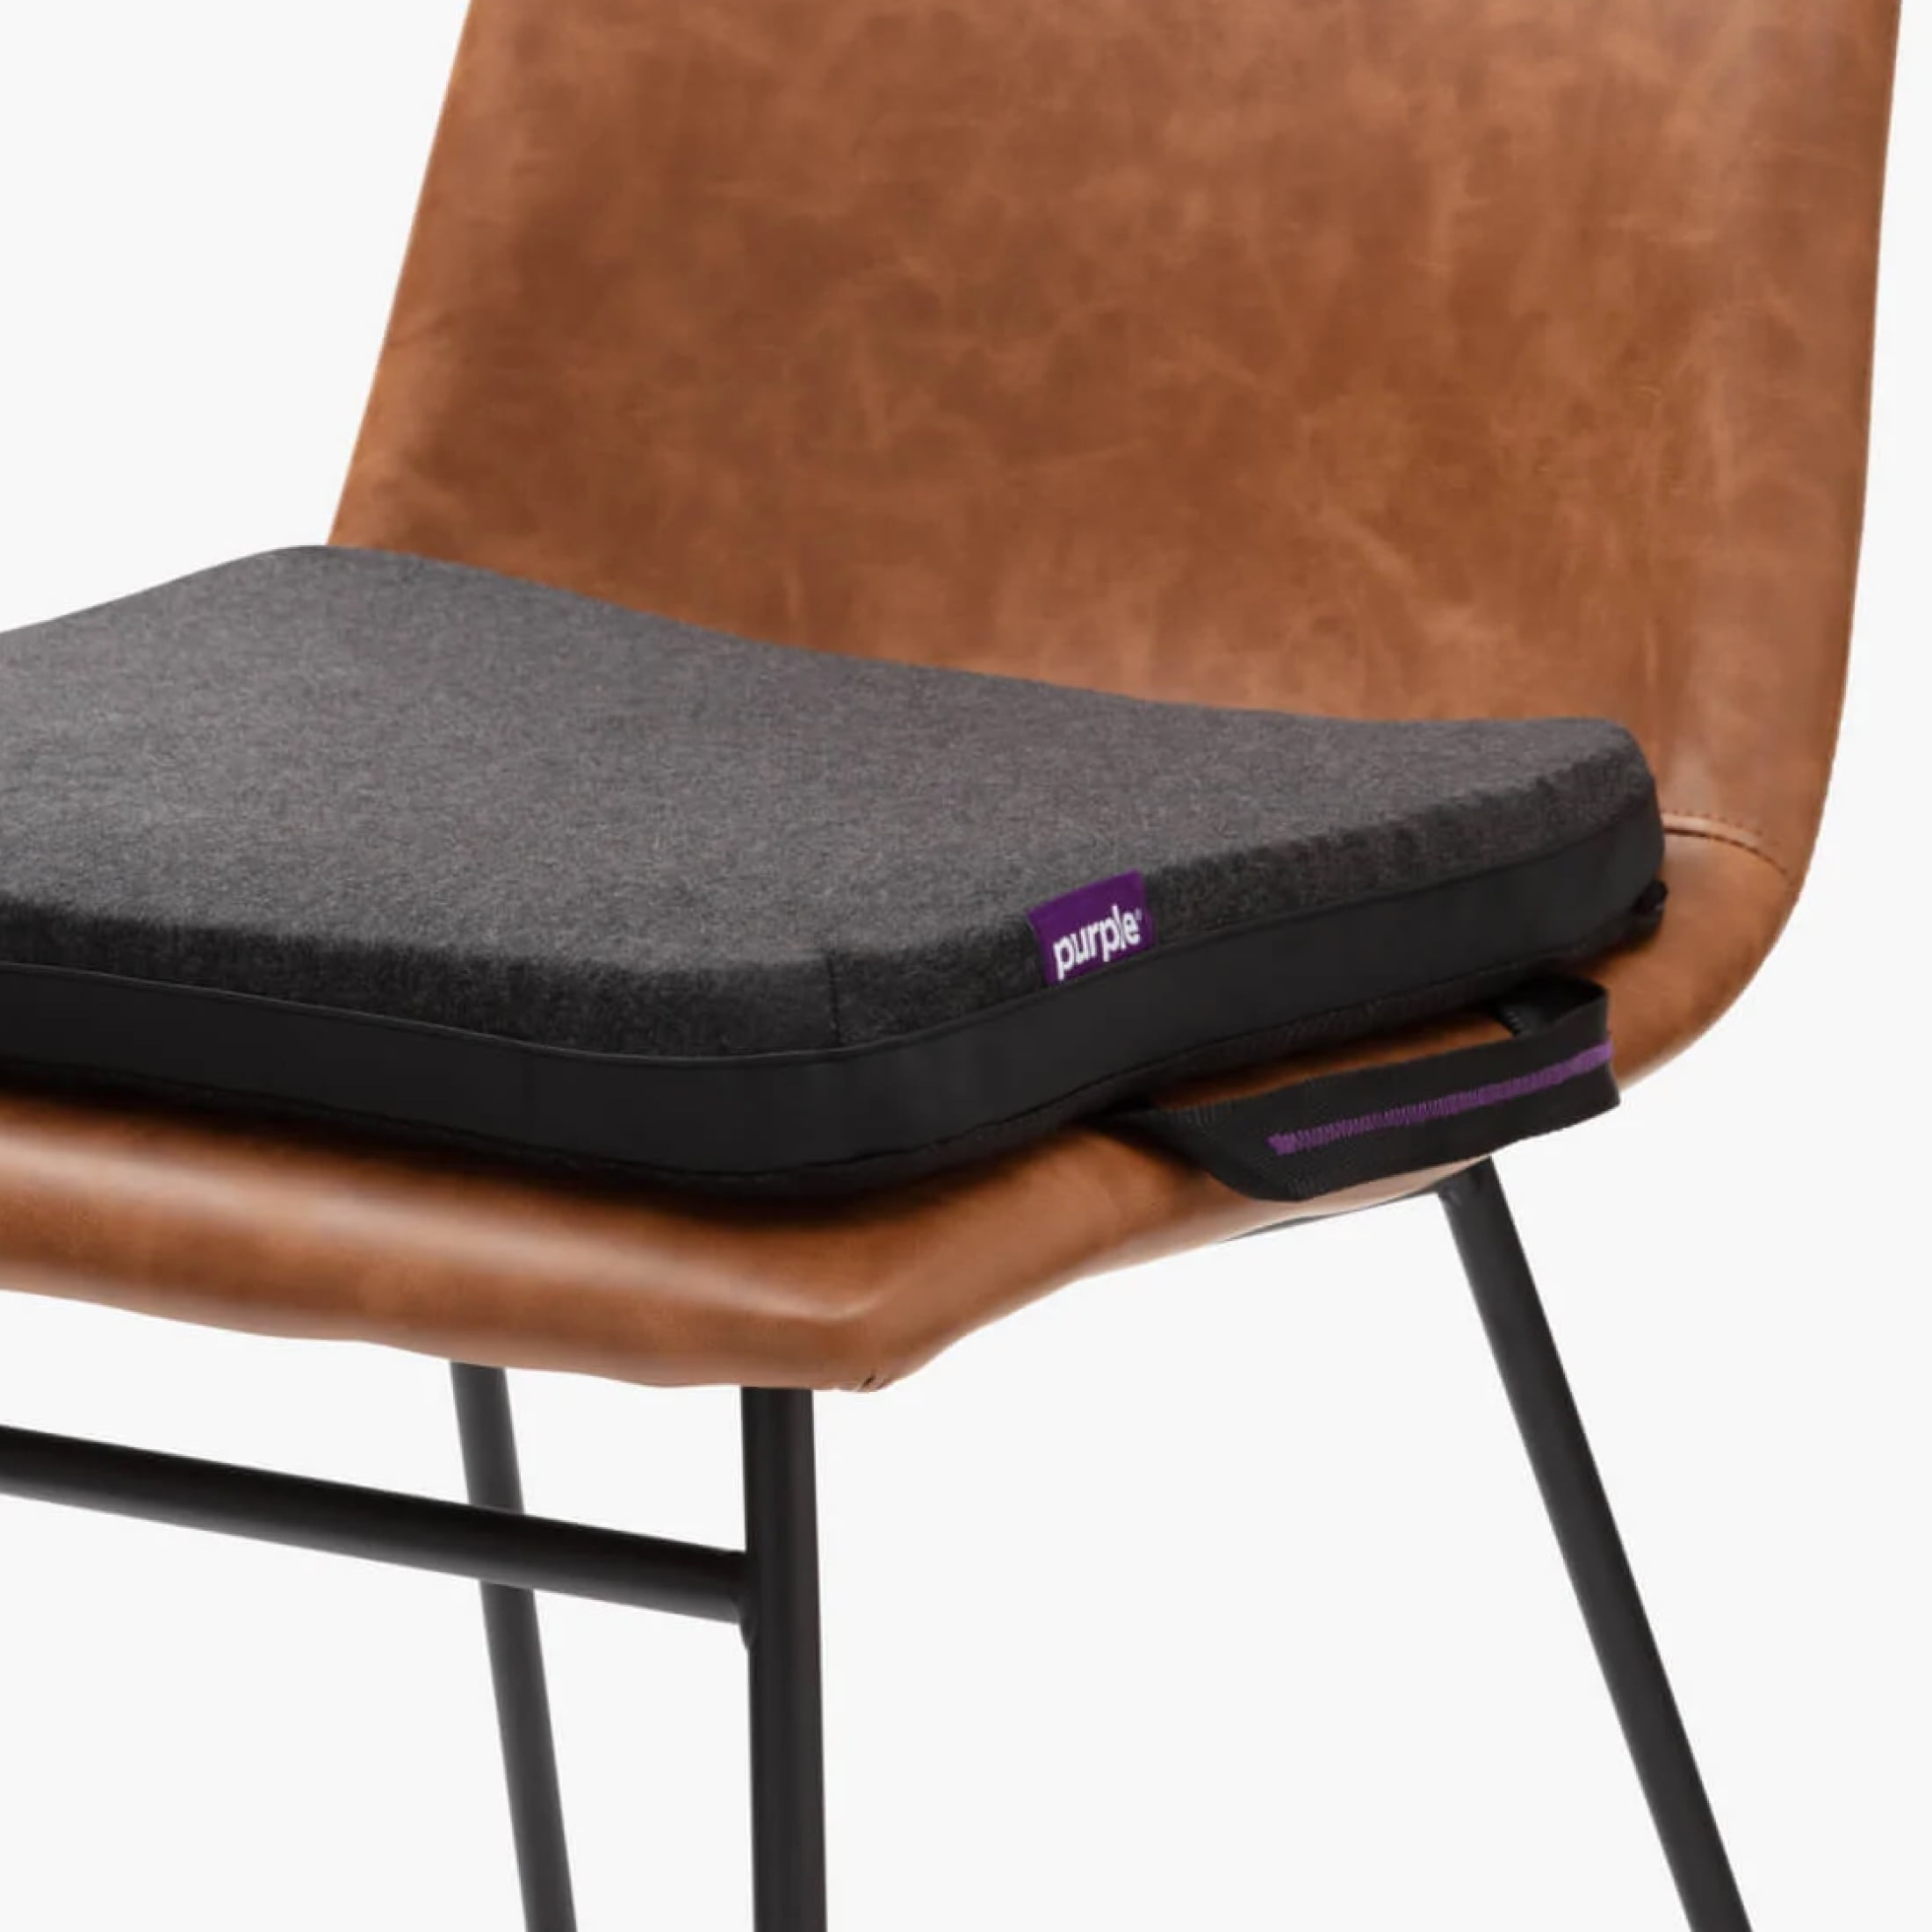 The Simply Purple No Pressure Seat Cushion